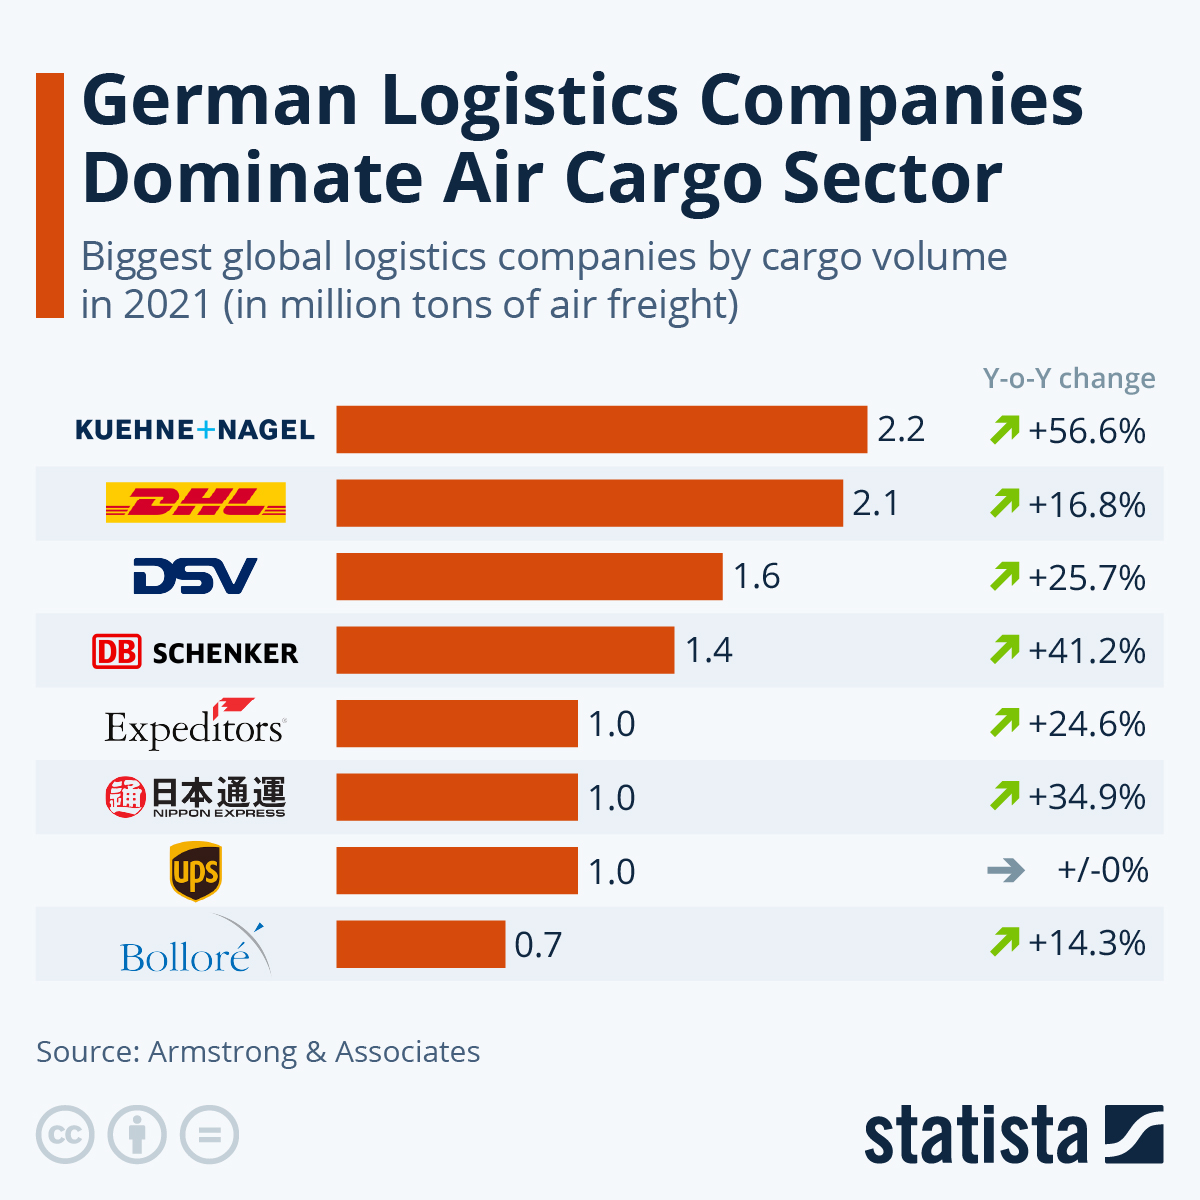 German Logistics Companies Dominate the Air Cargo Sector
